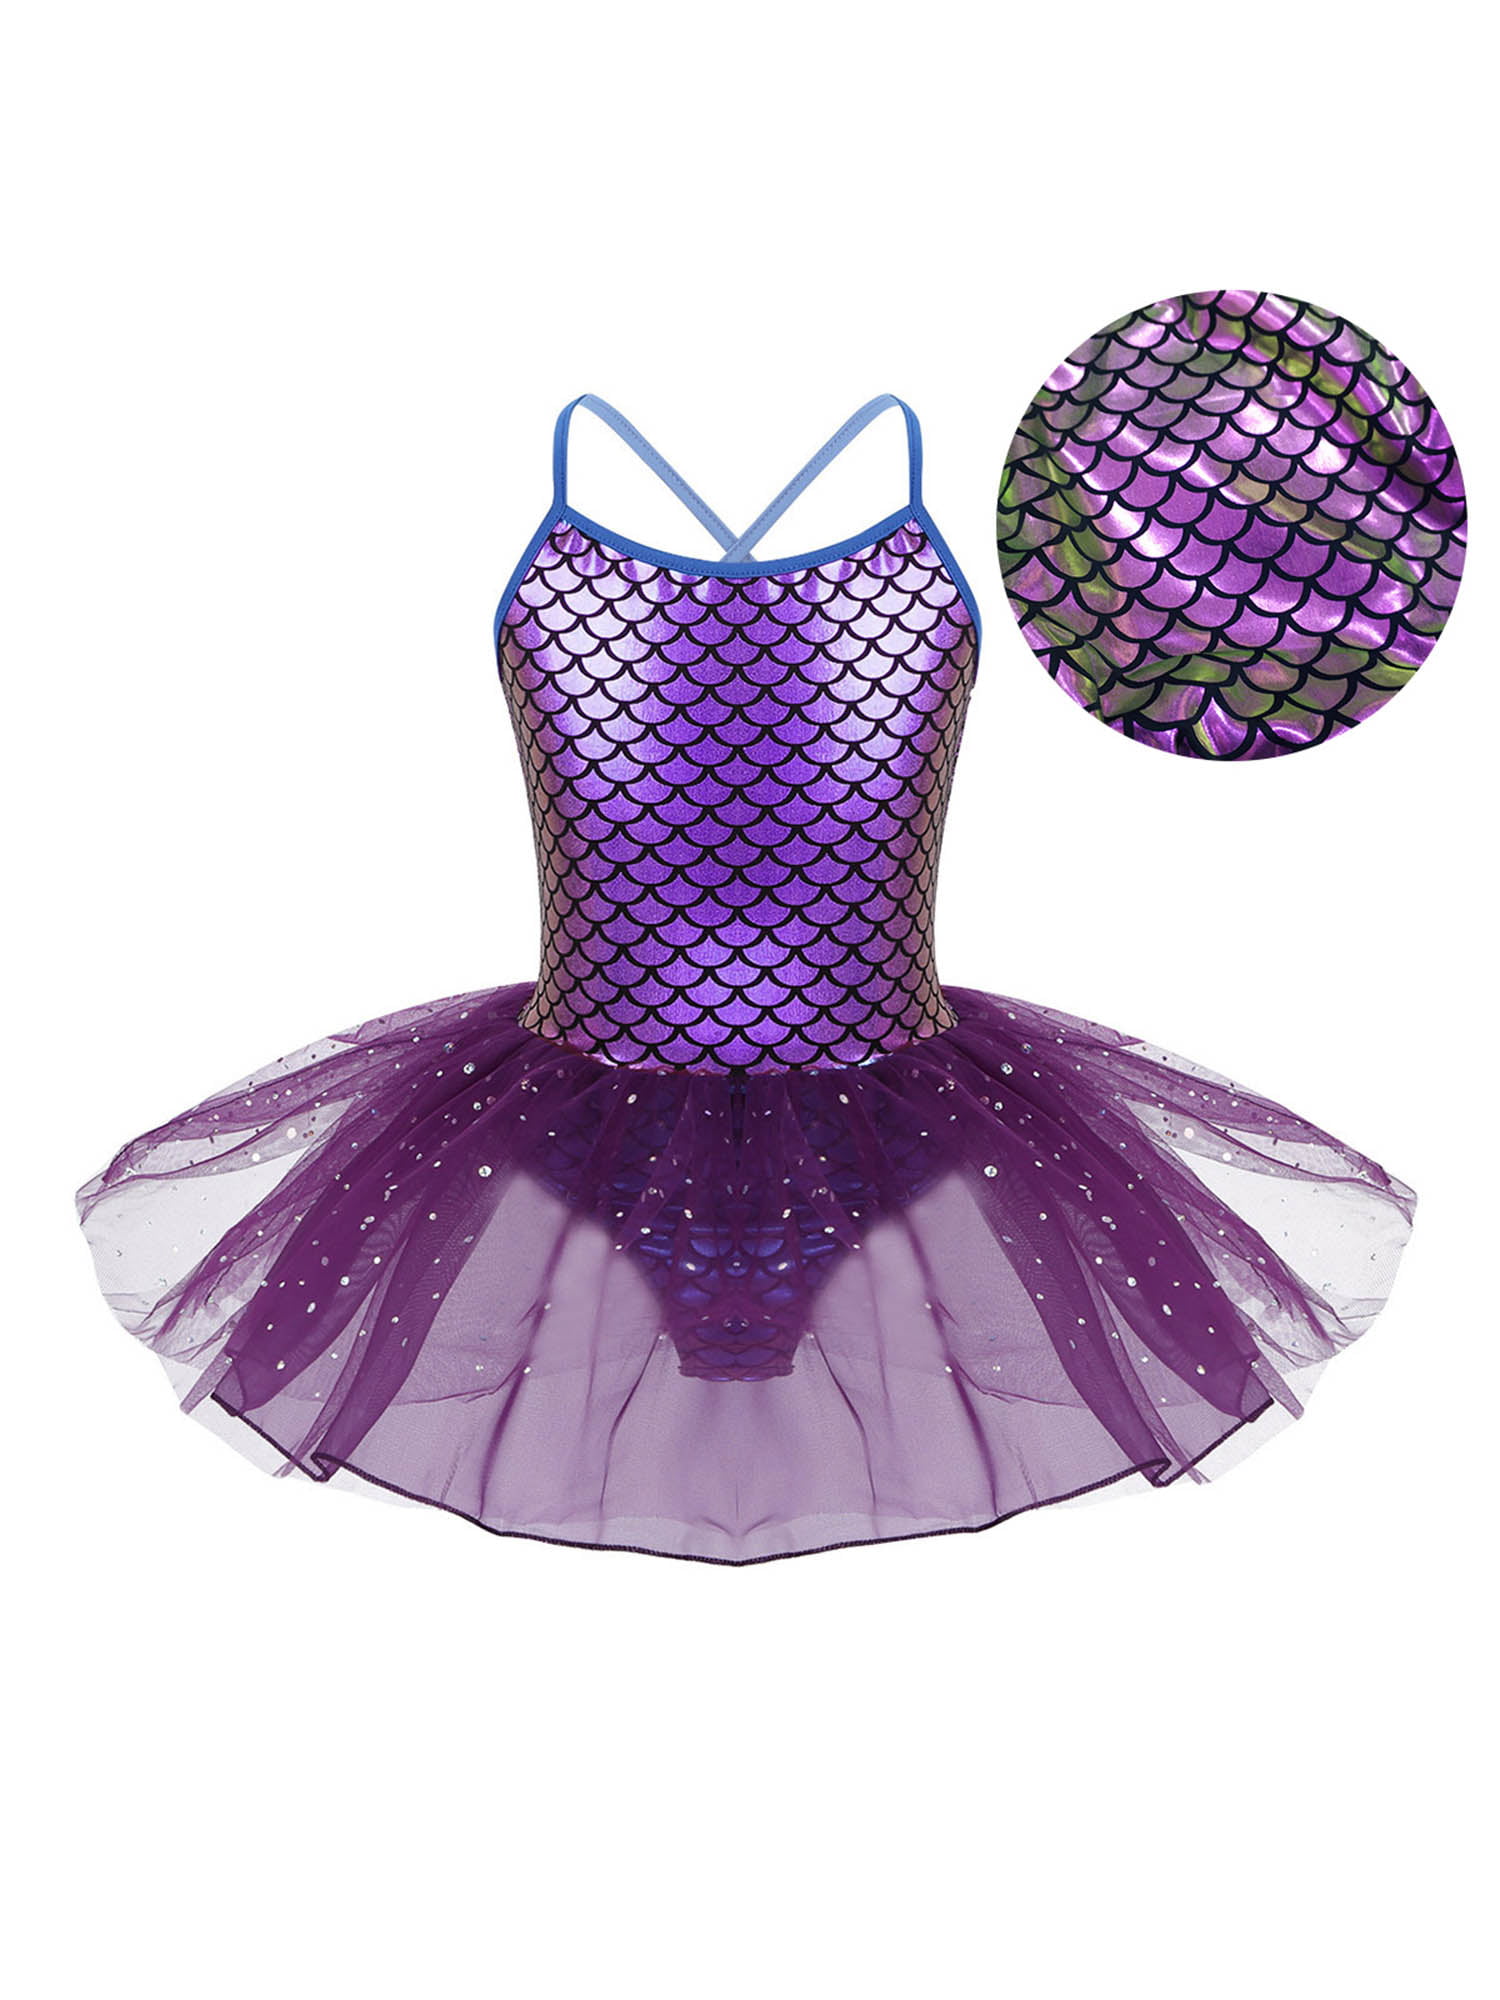 Fairy Dress Ballet Tutu Dance Costume Purple 5-7 Years Polyester Stretch Leotard